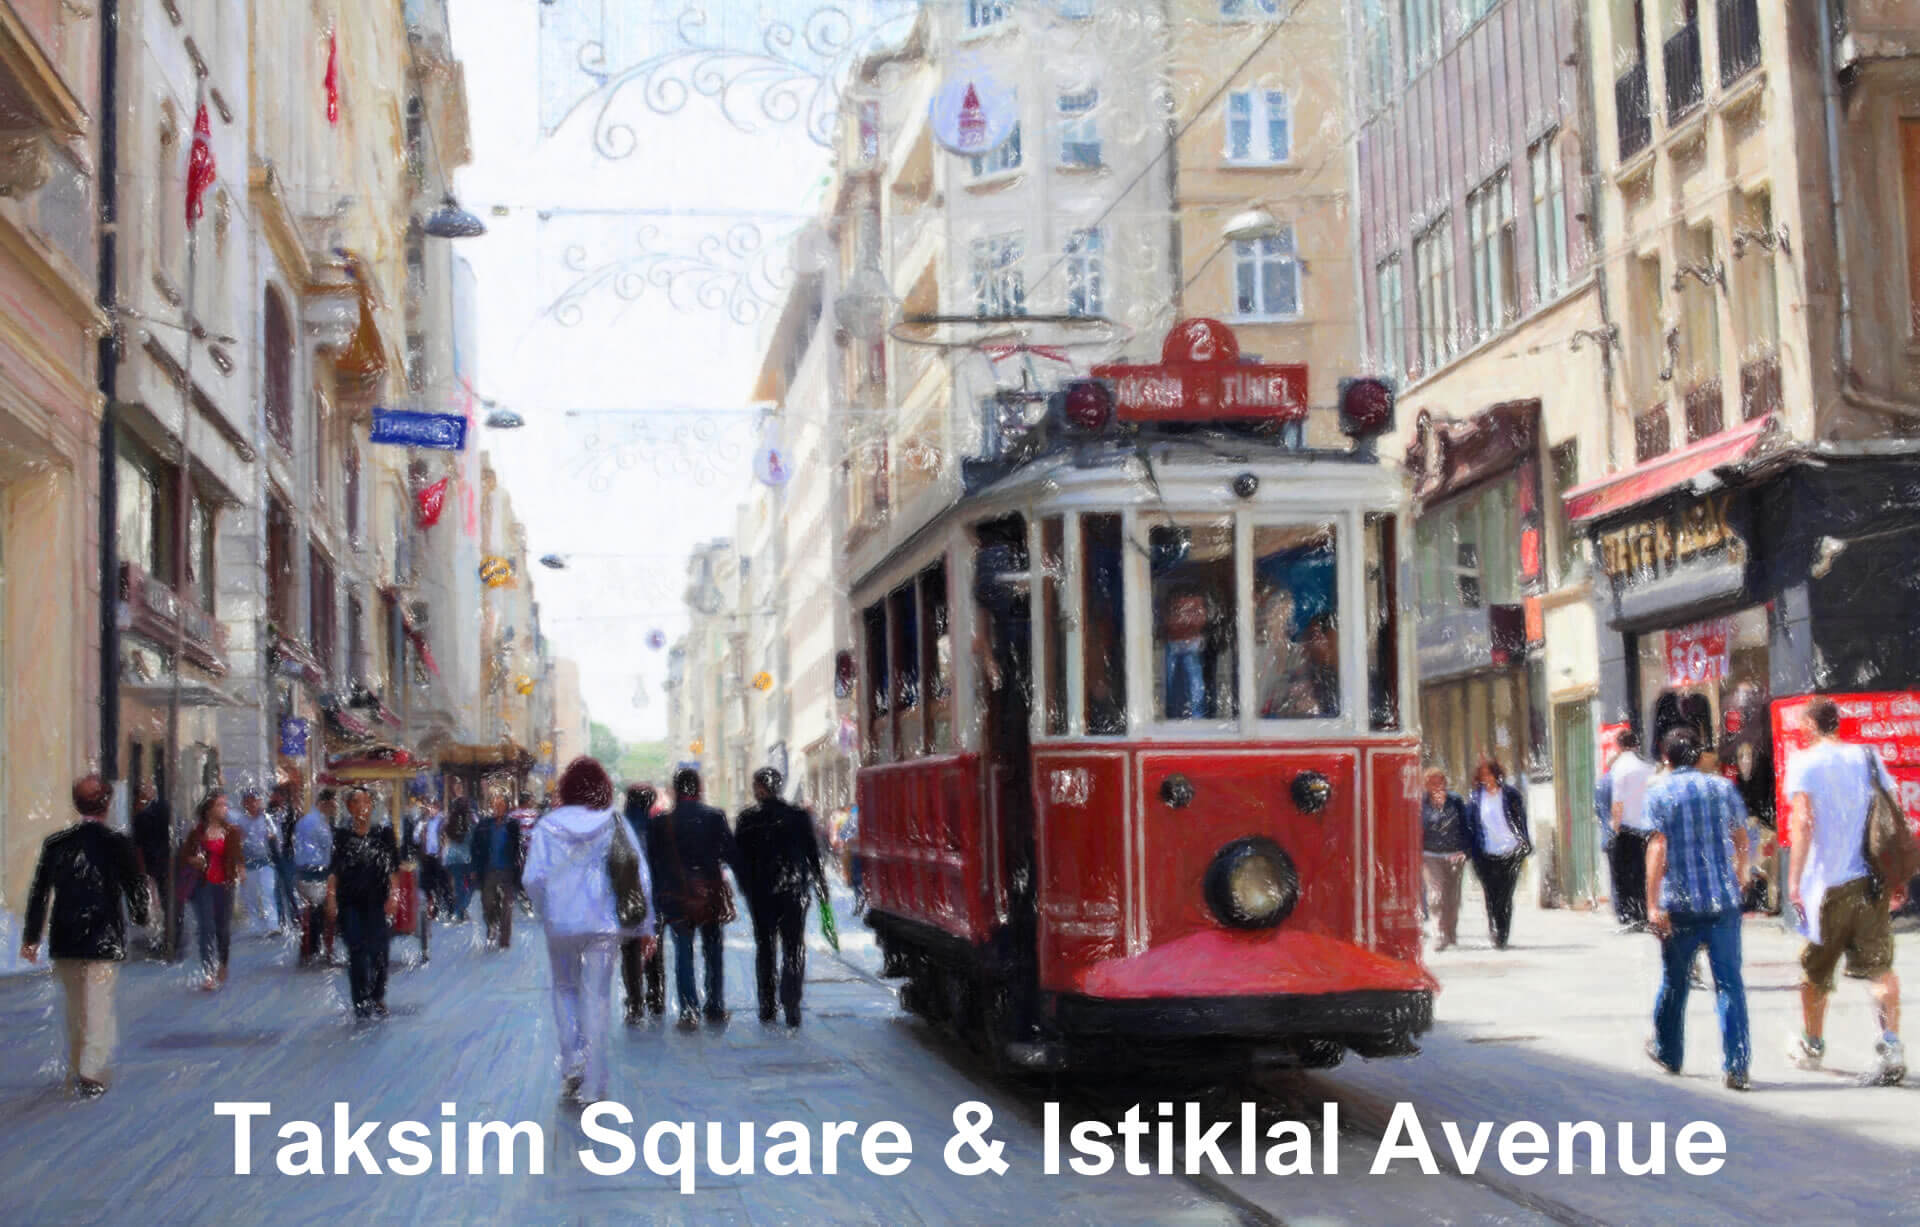 Taksim Square & Istiklal Avenue